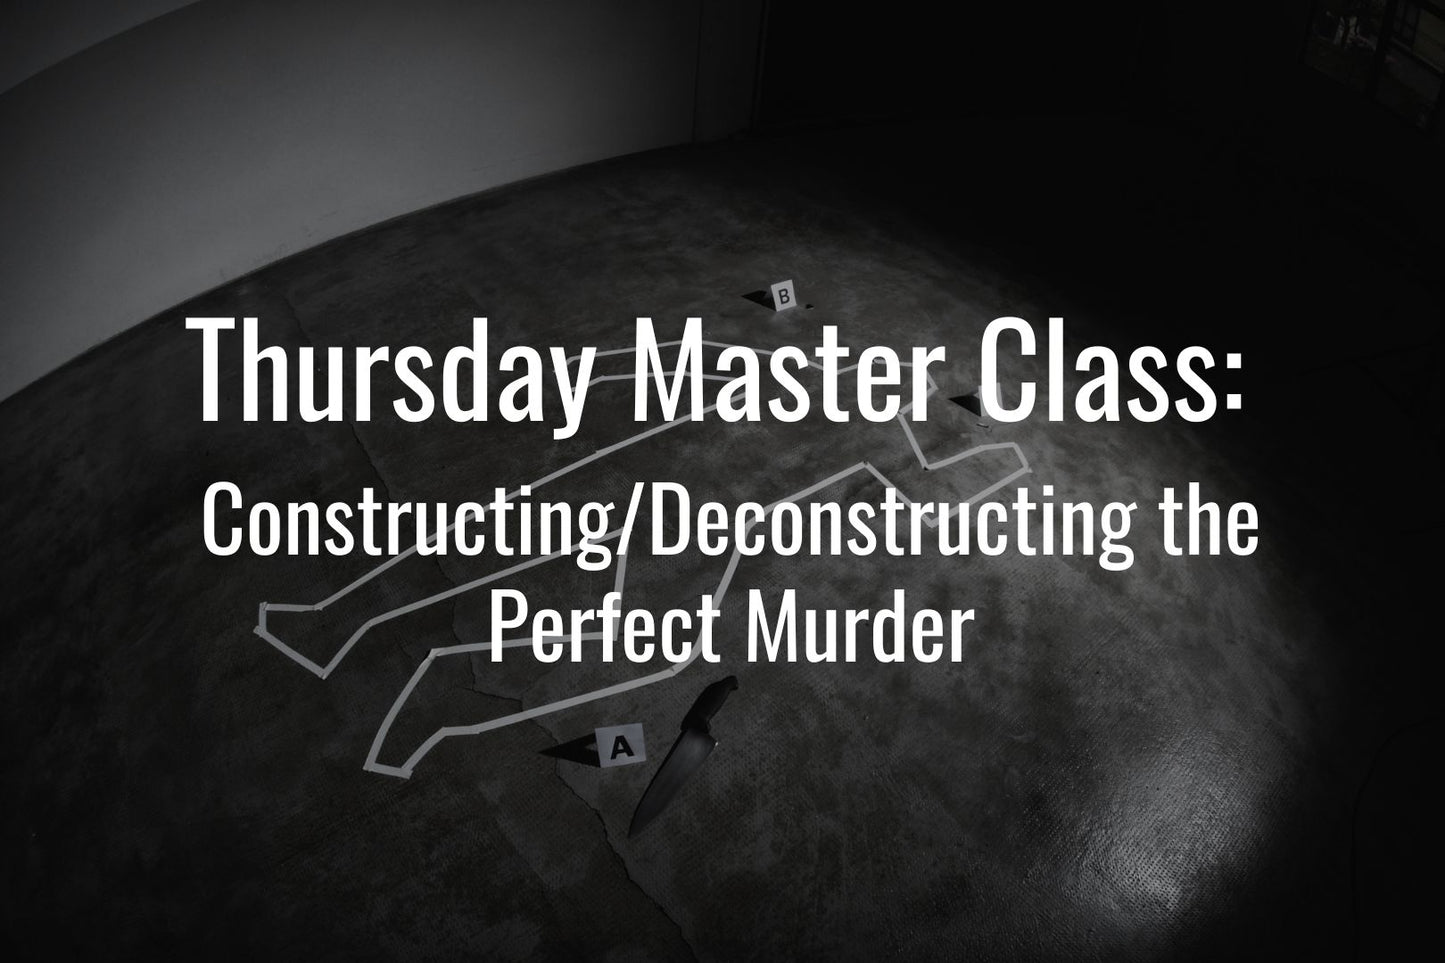 Thursday Master Class: Constructing/Deconstructing the Perfect Murder